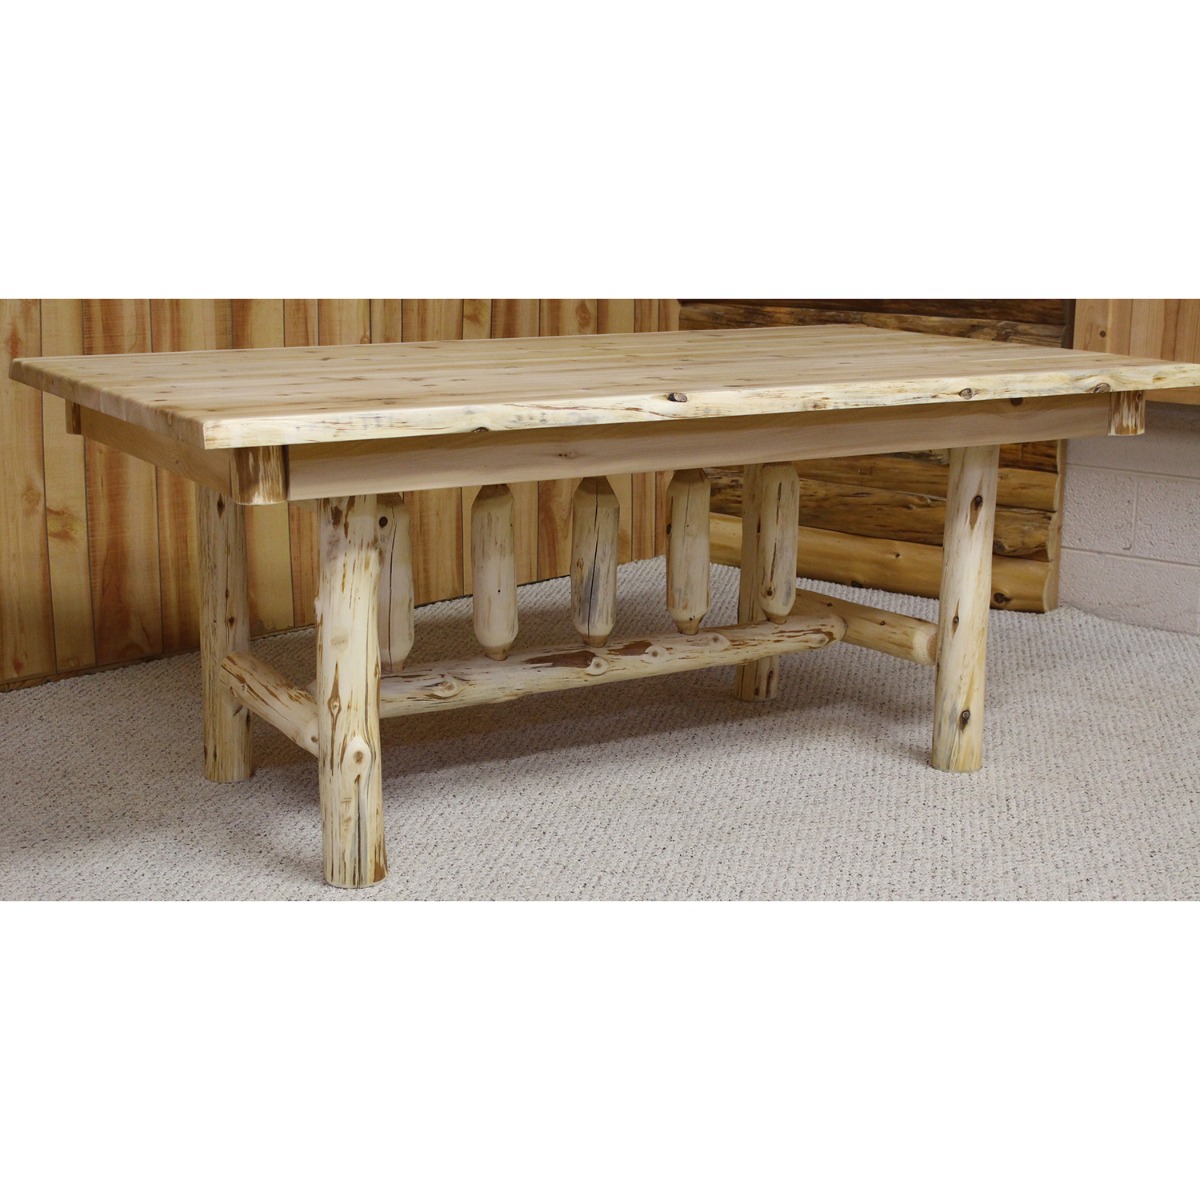 Image of Hidden Lake Cedar Log Trestle Dining Table